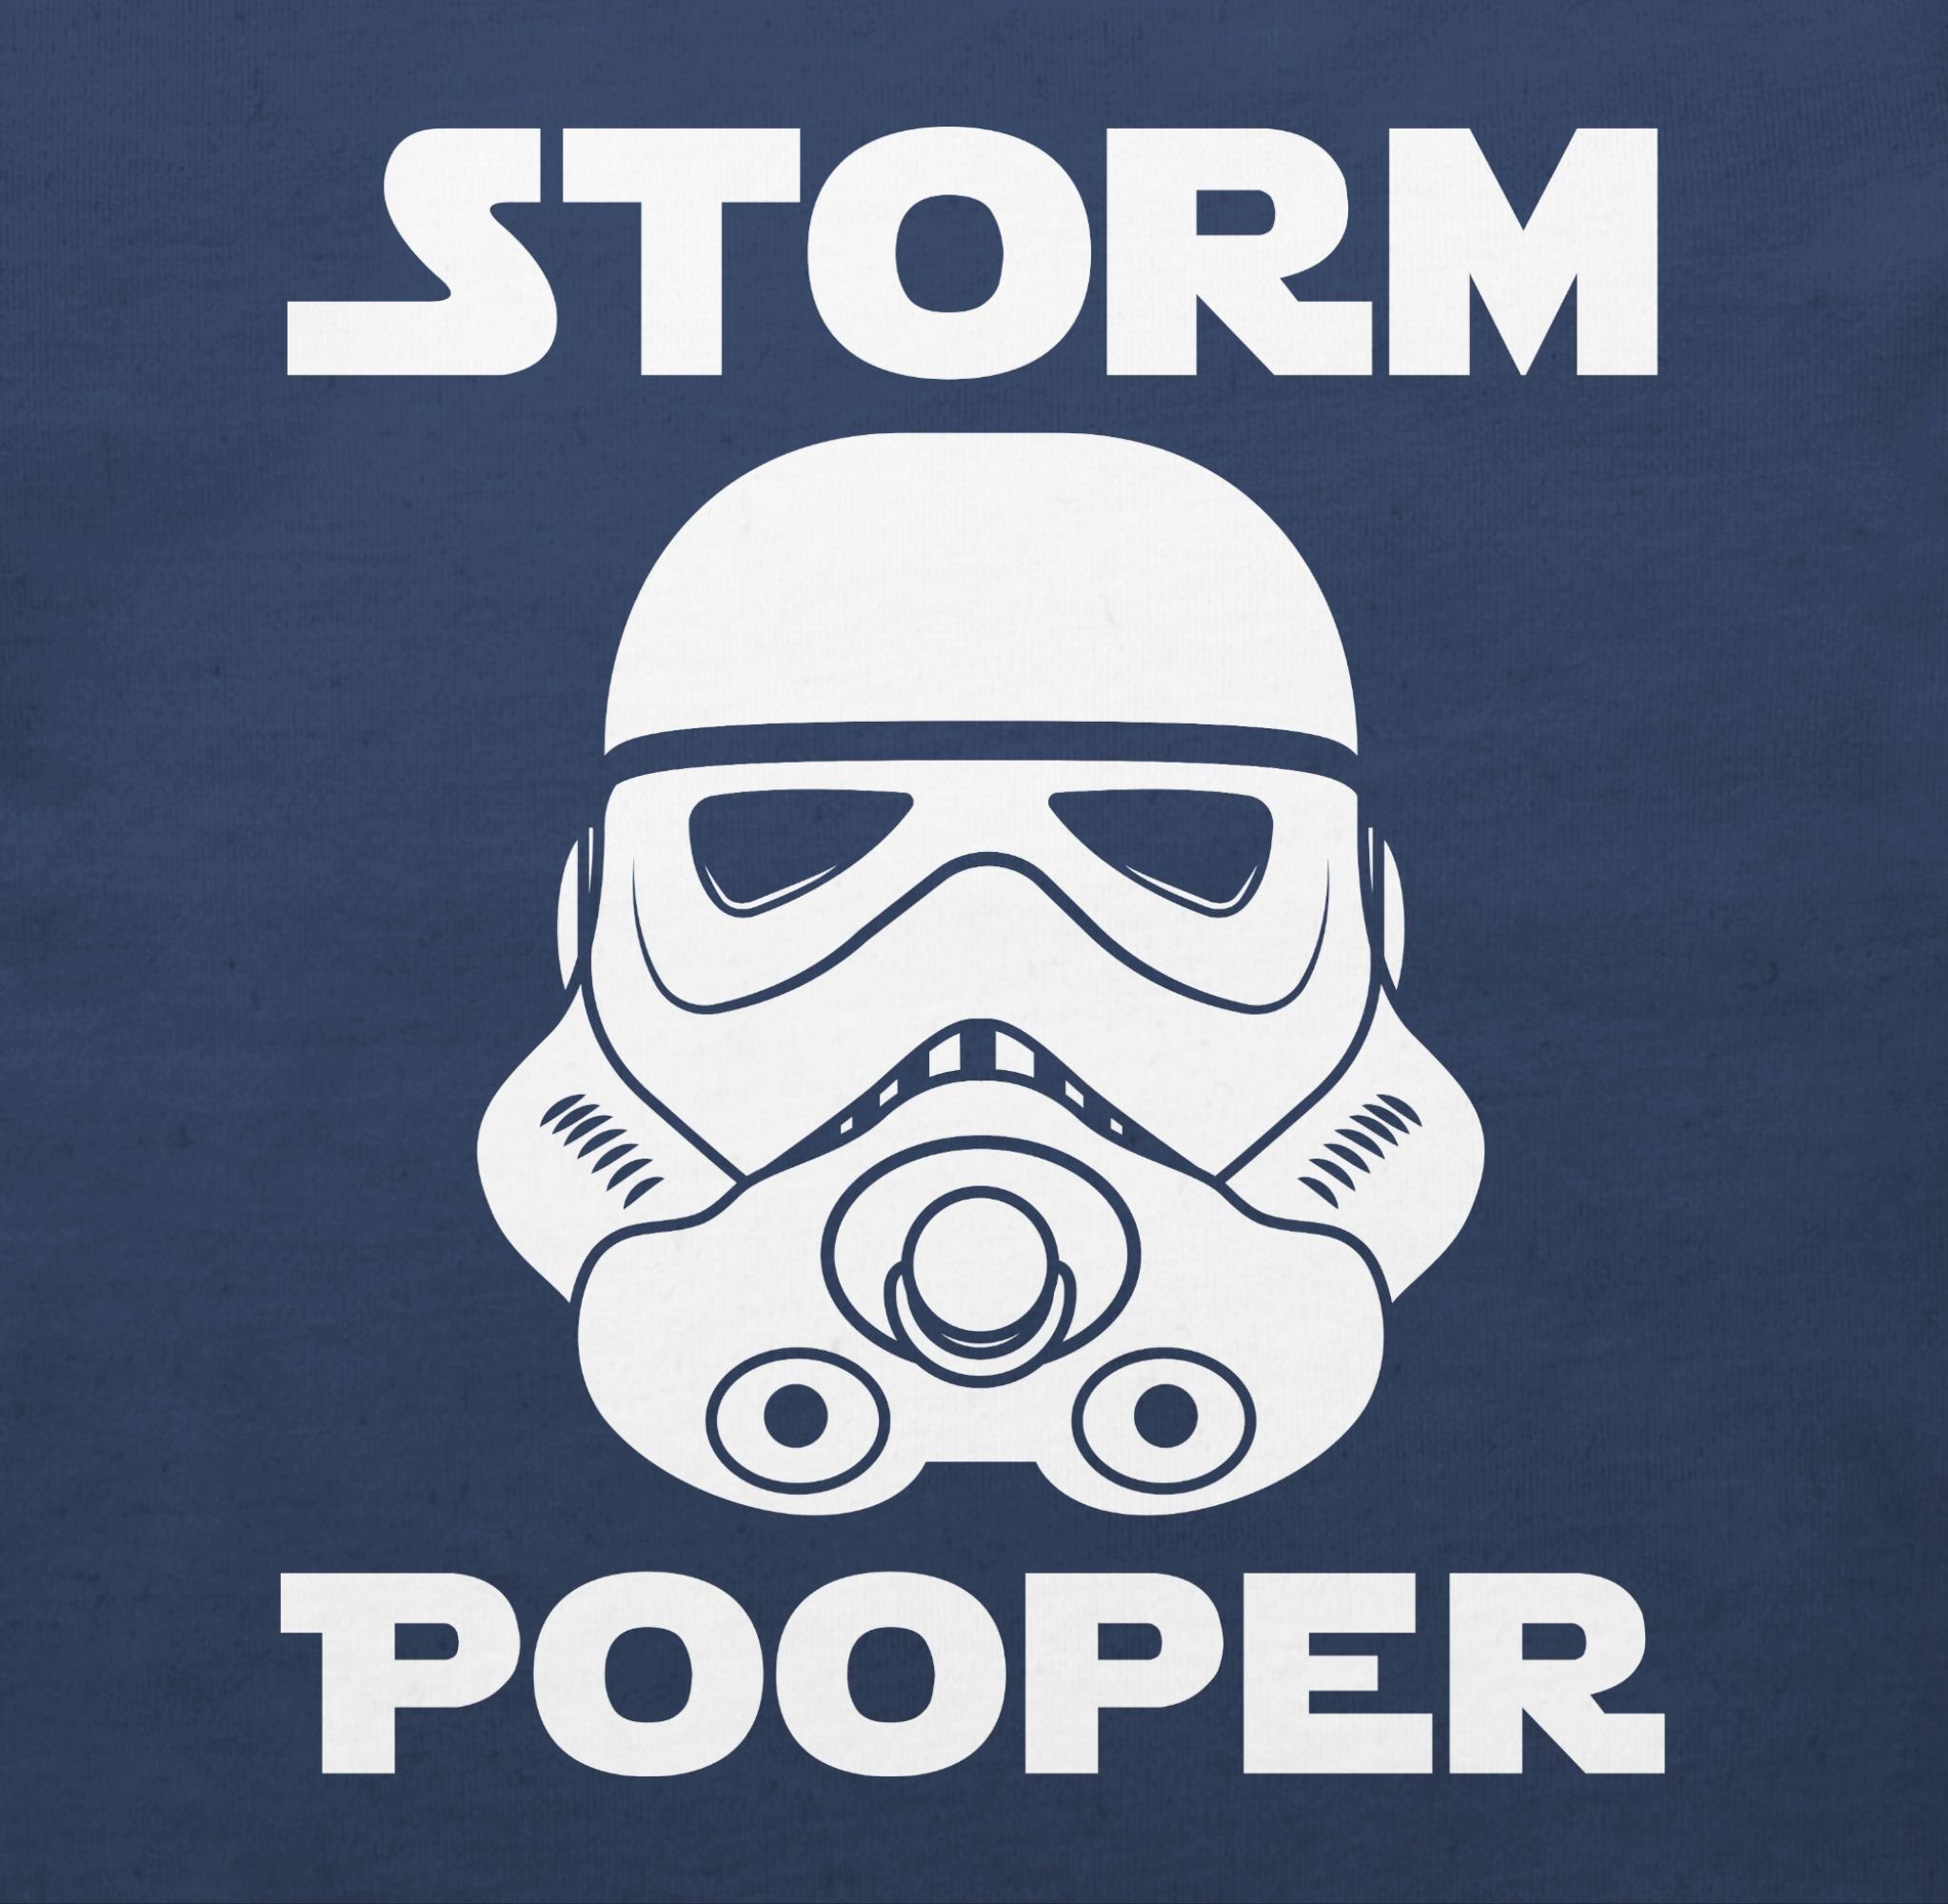 T-Shirt Pooper - Baby 1 Shirtracer Navy Blau Storm Sprüche Stormpooper